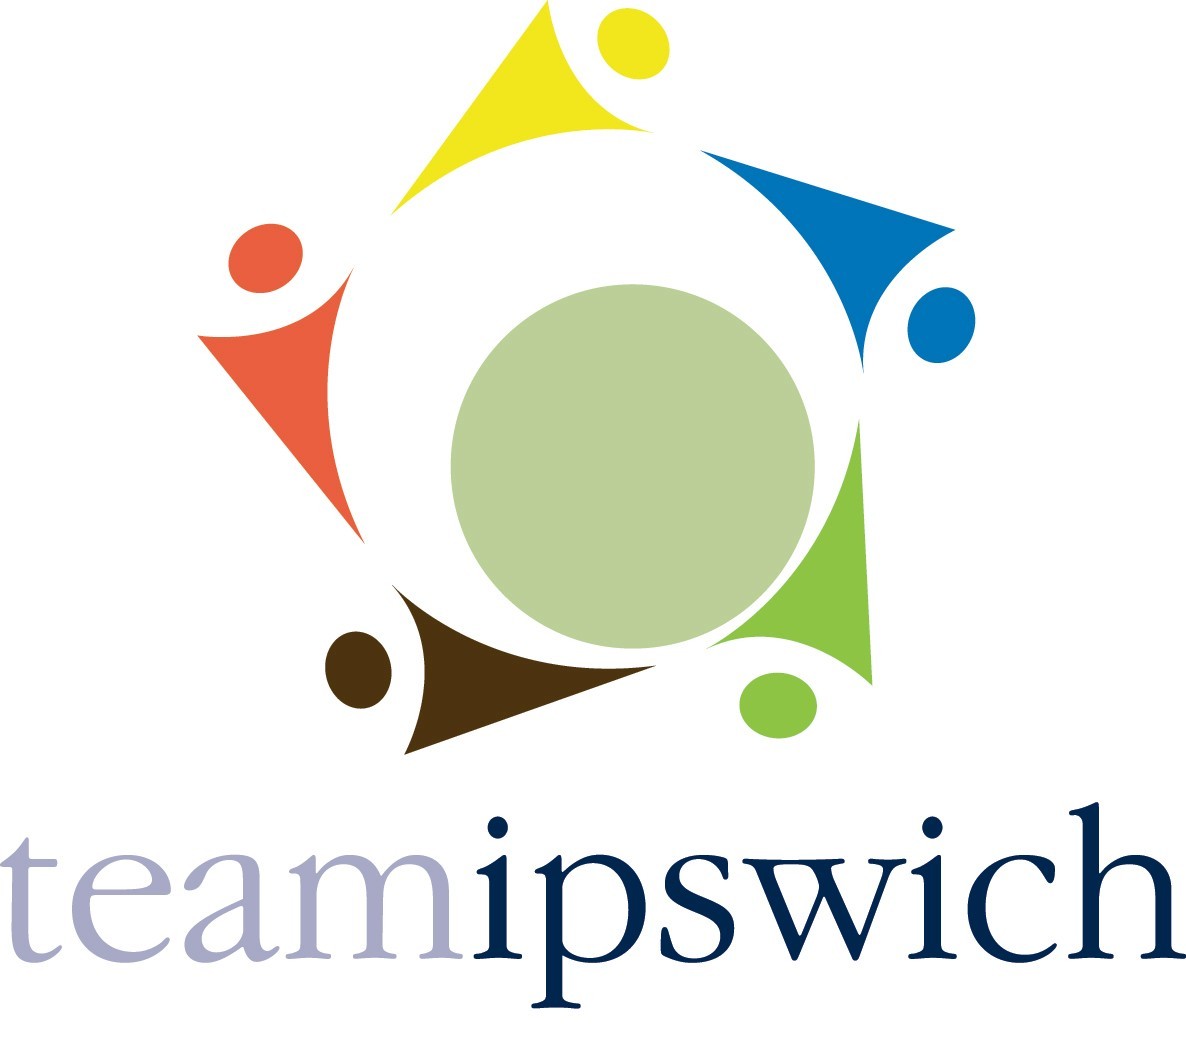 Ipswich triathlon club - old homepage